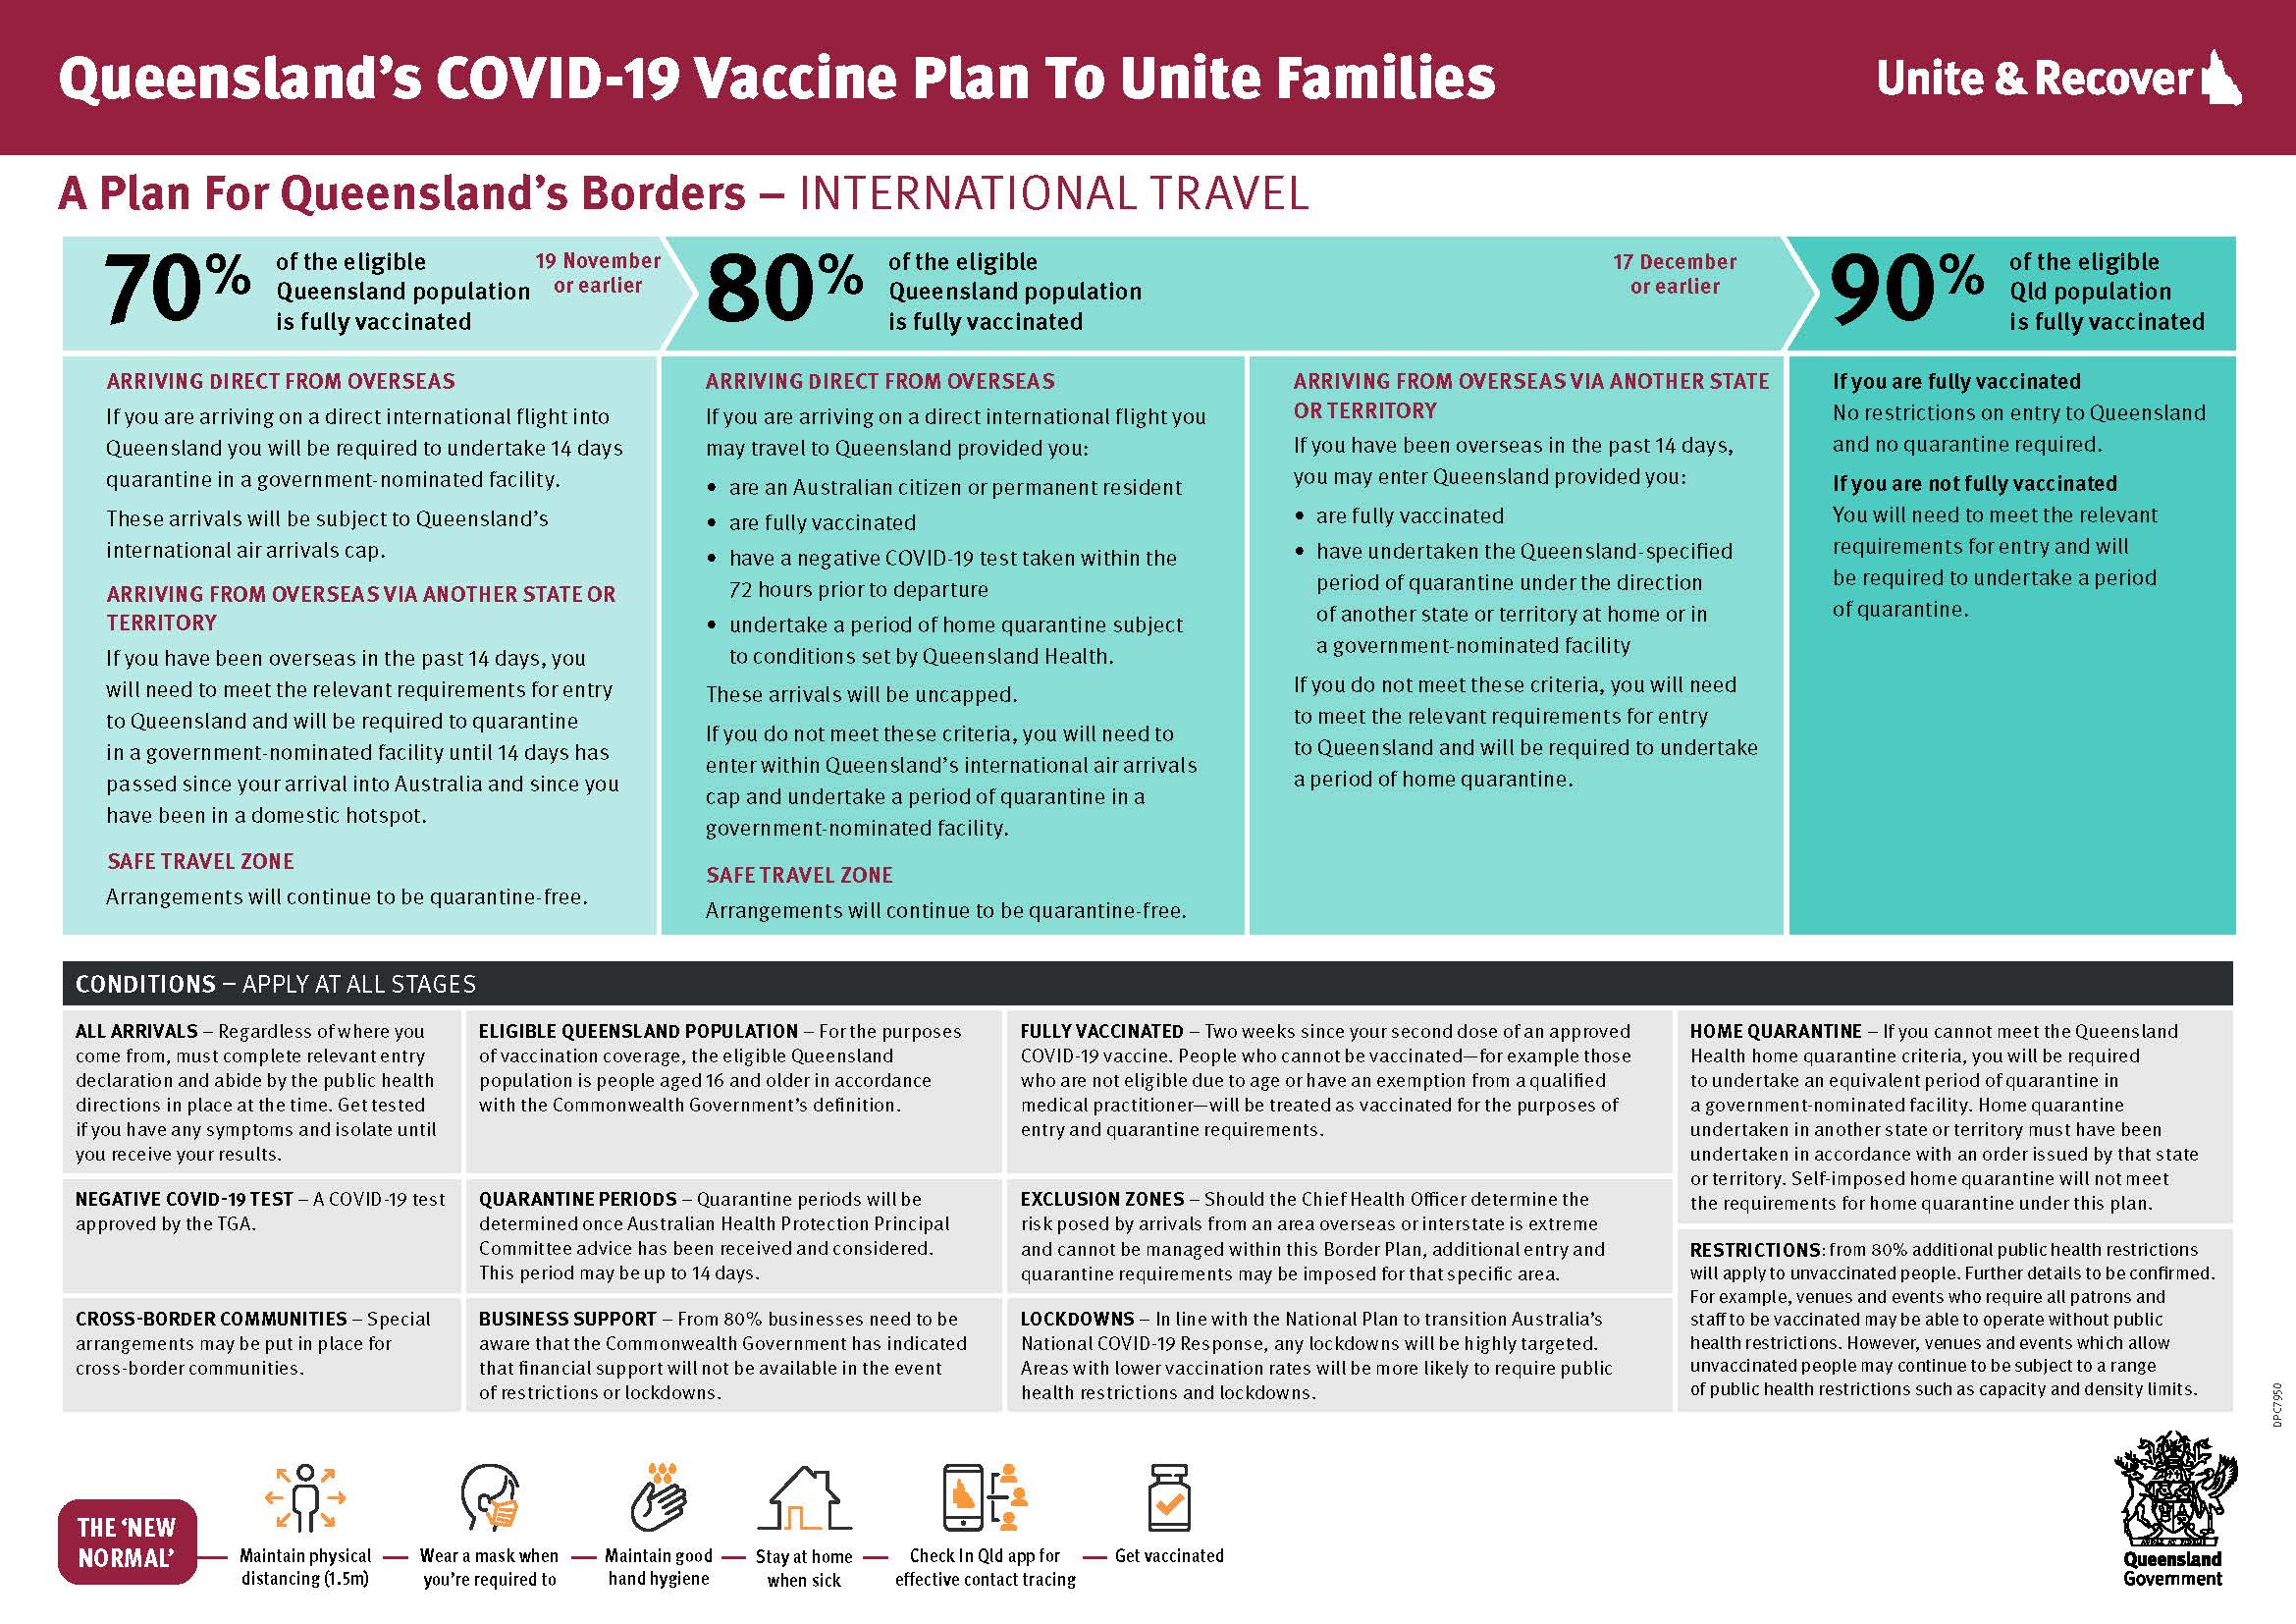 Image (2/2): Queensland’s COVID-19 Vaccine Plan to Unite Families – International Travel